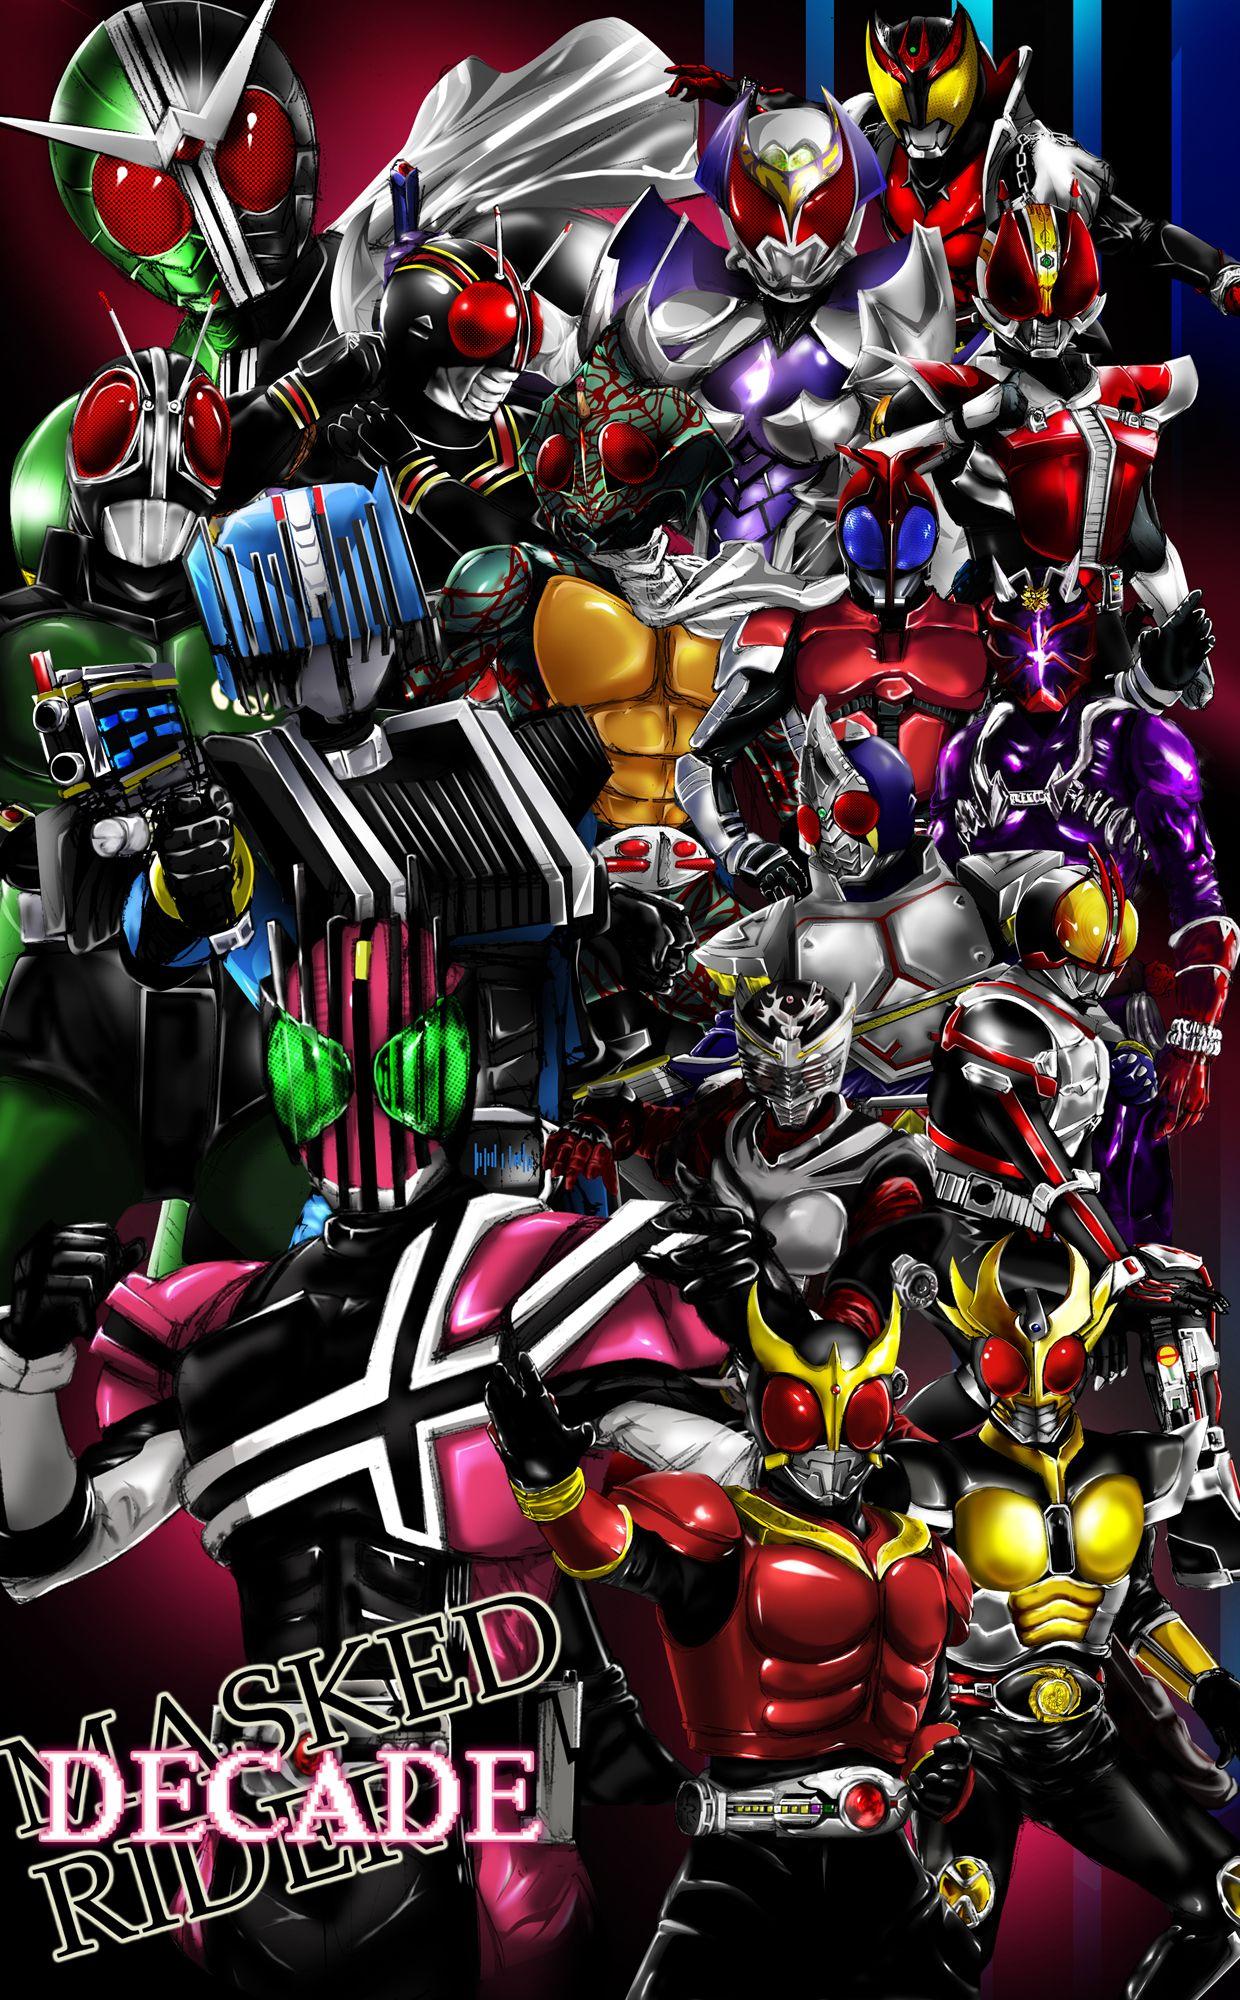 Kamen Rider Black RX Rider Series Anime Image Board